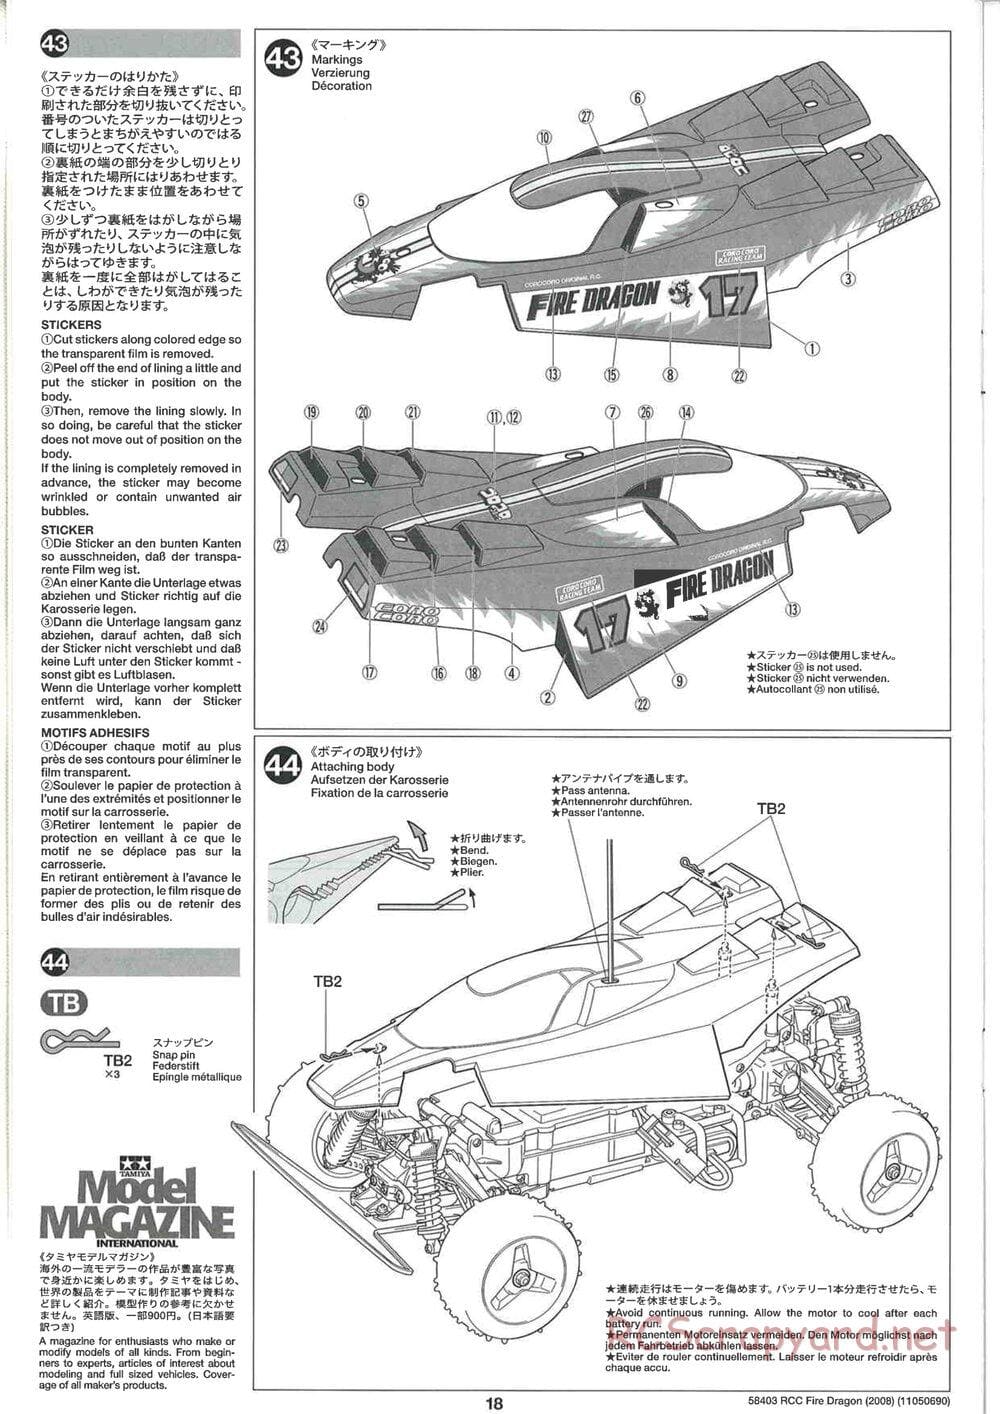 Tamiya - Fire Dragon 2008 - TS2 Chassis - Manual - Page 18